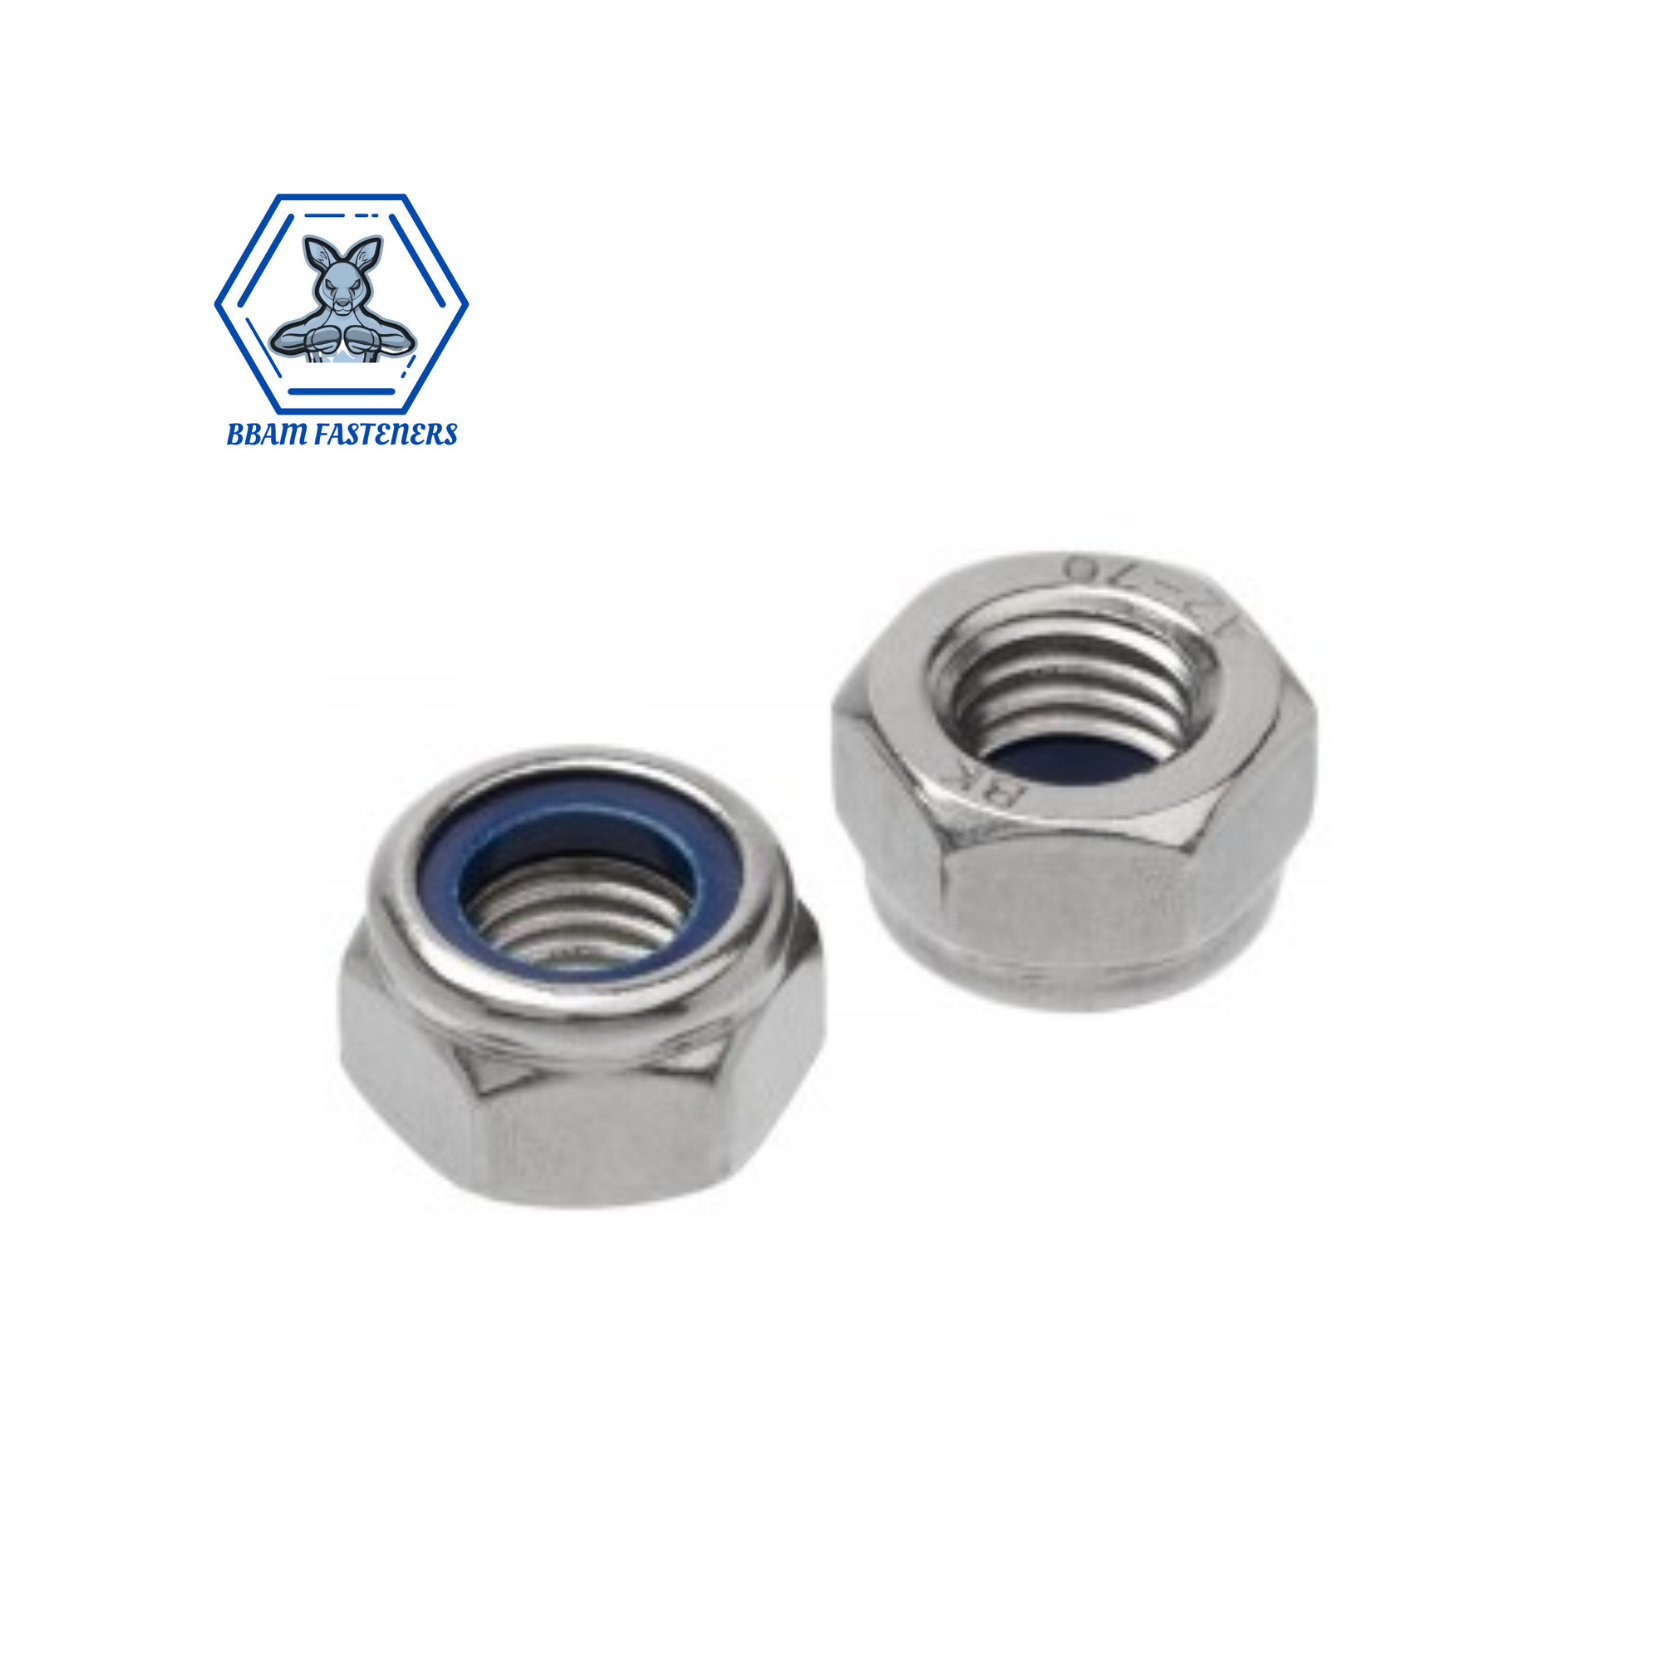 A4/316 Marine Grade Stainless Steel DIN 985 M4-0.70 Nylon Insert Locking Nut 